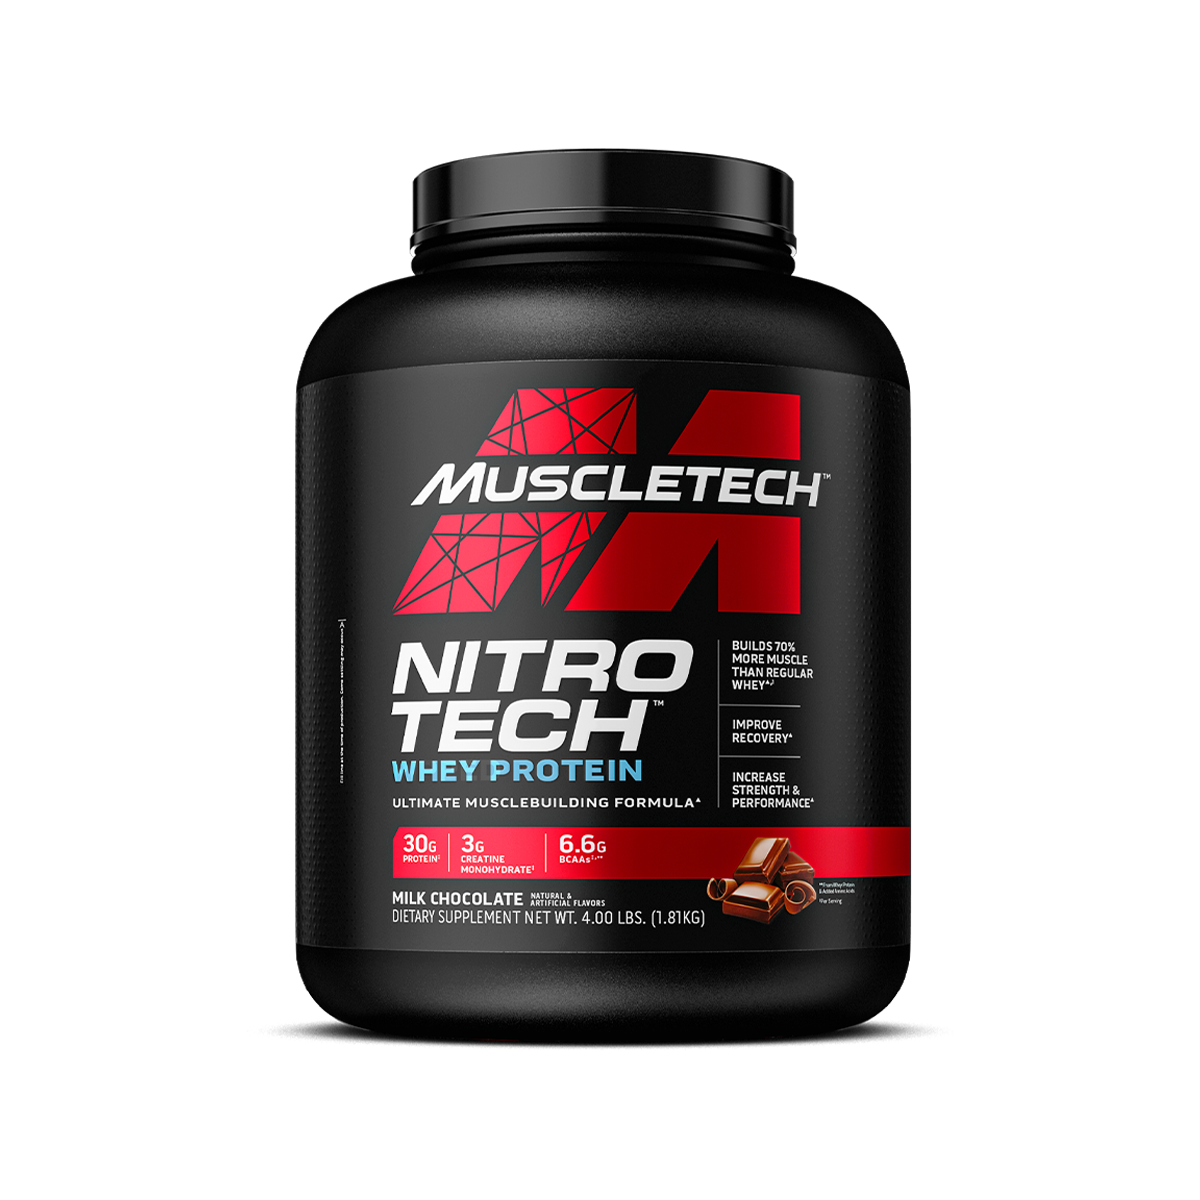 NitroTech Whey Protein Bottle